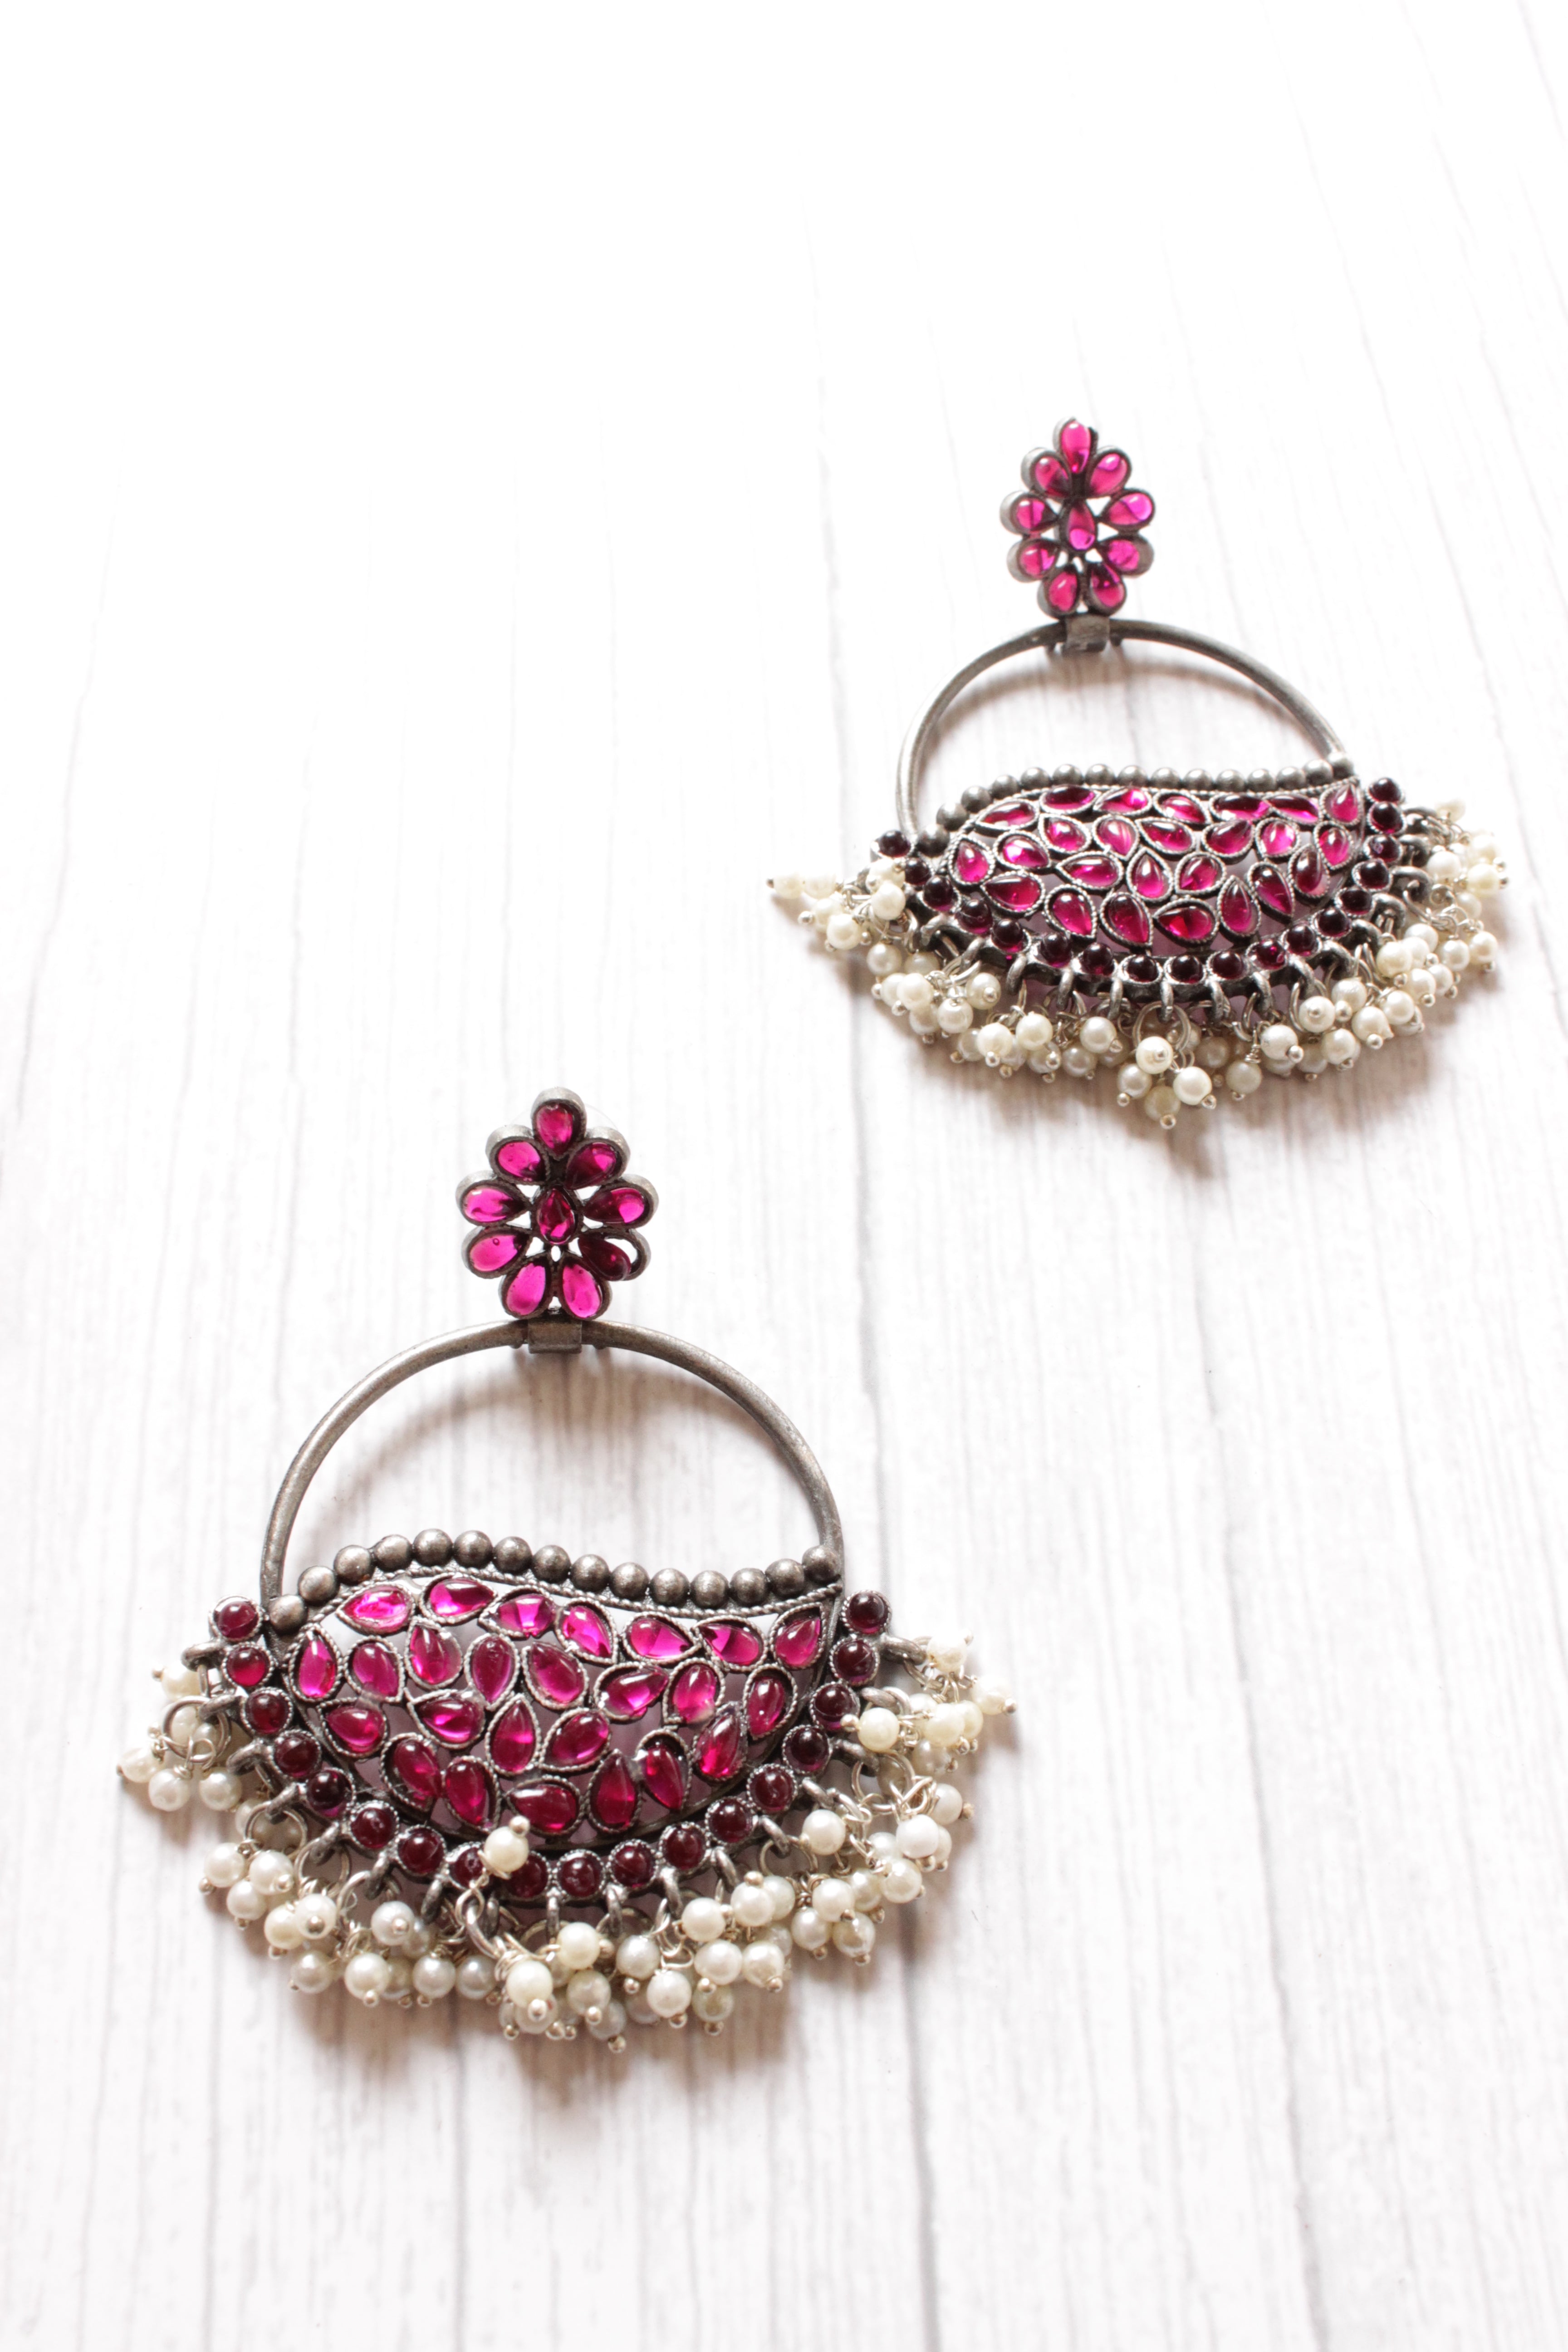 Pink Rhinestones Embedded Circular Dangler Earring with White Beads Detailing